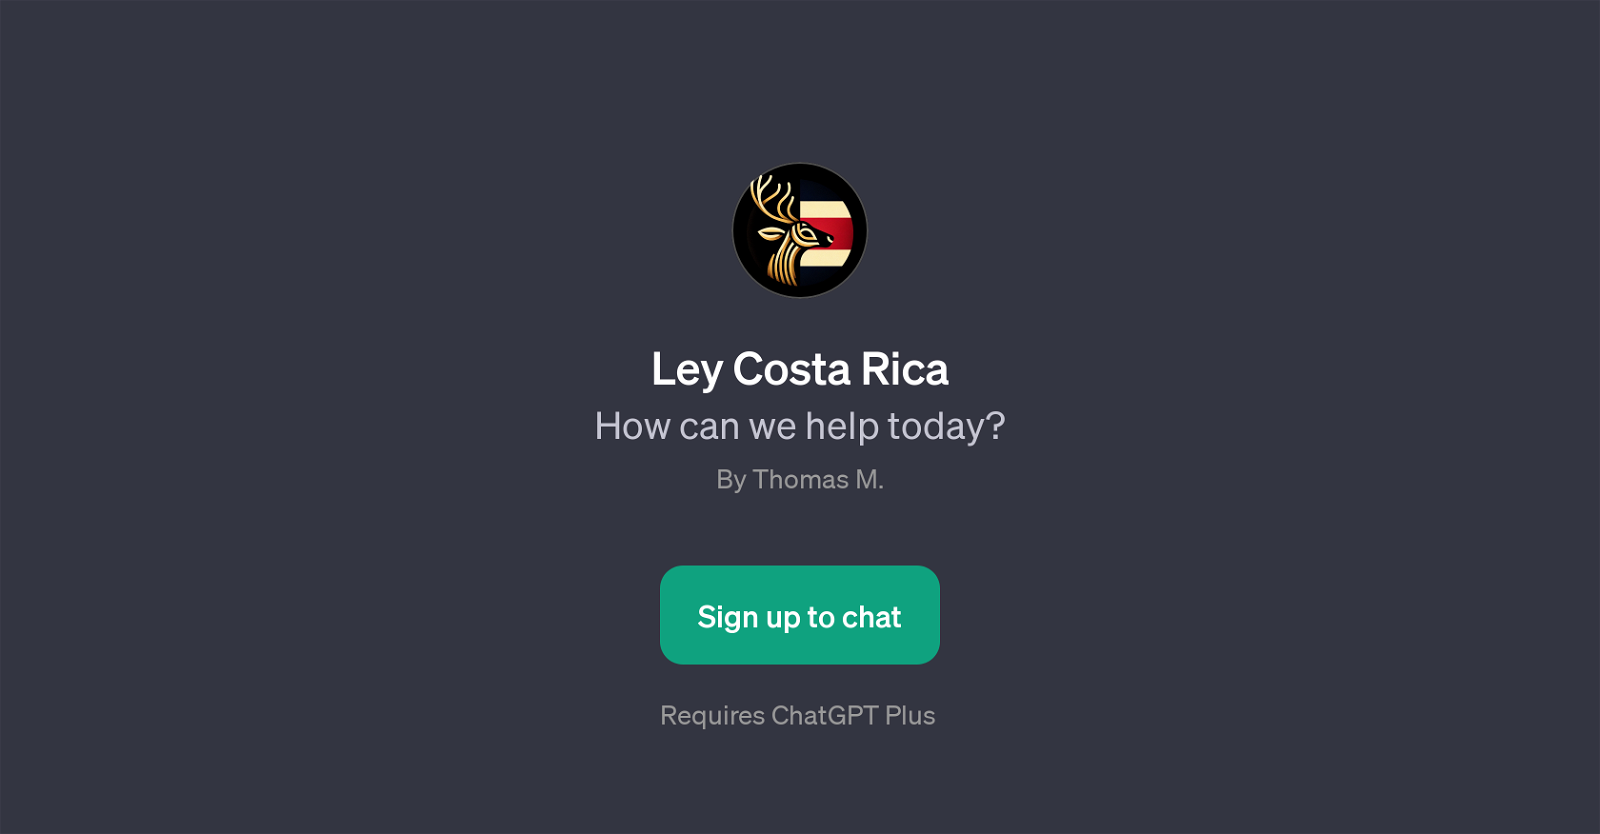 Ley Costa Rica website